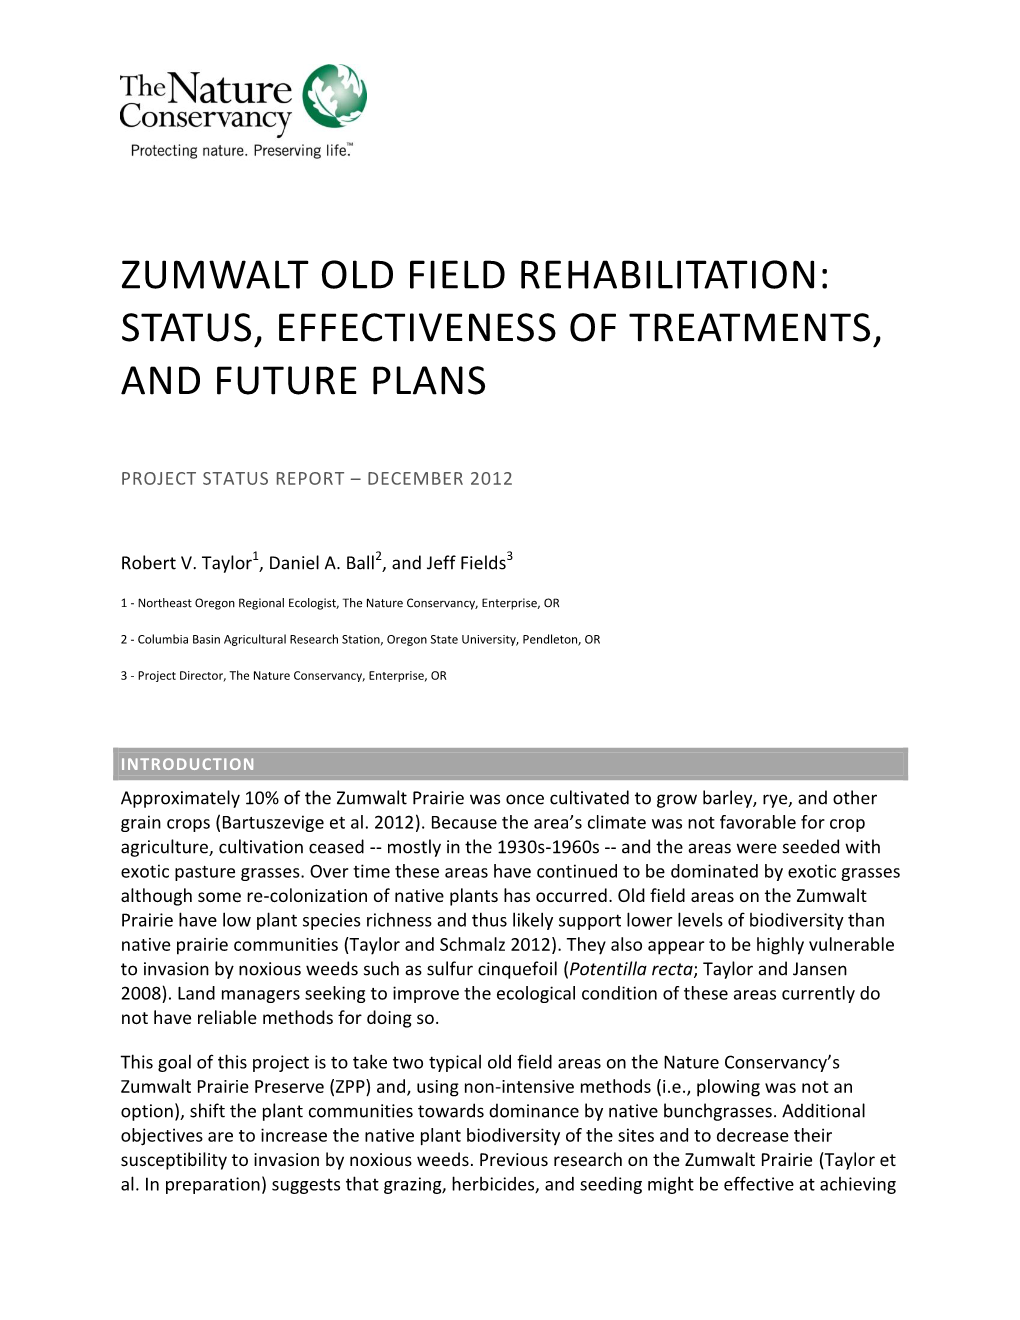 Zumwalt Old Field Rehabilitation: Status, Effectiveness of Treatments, and Future Plans